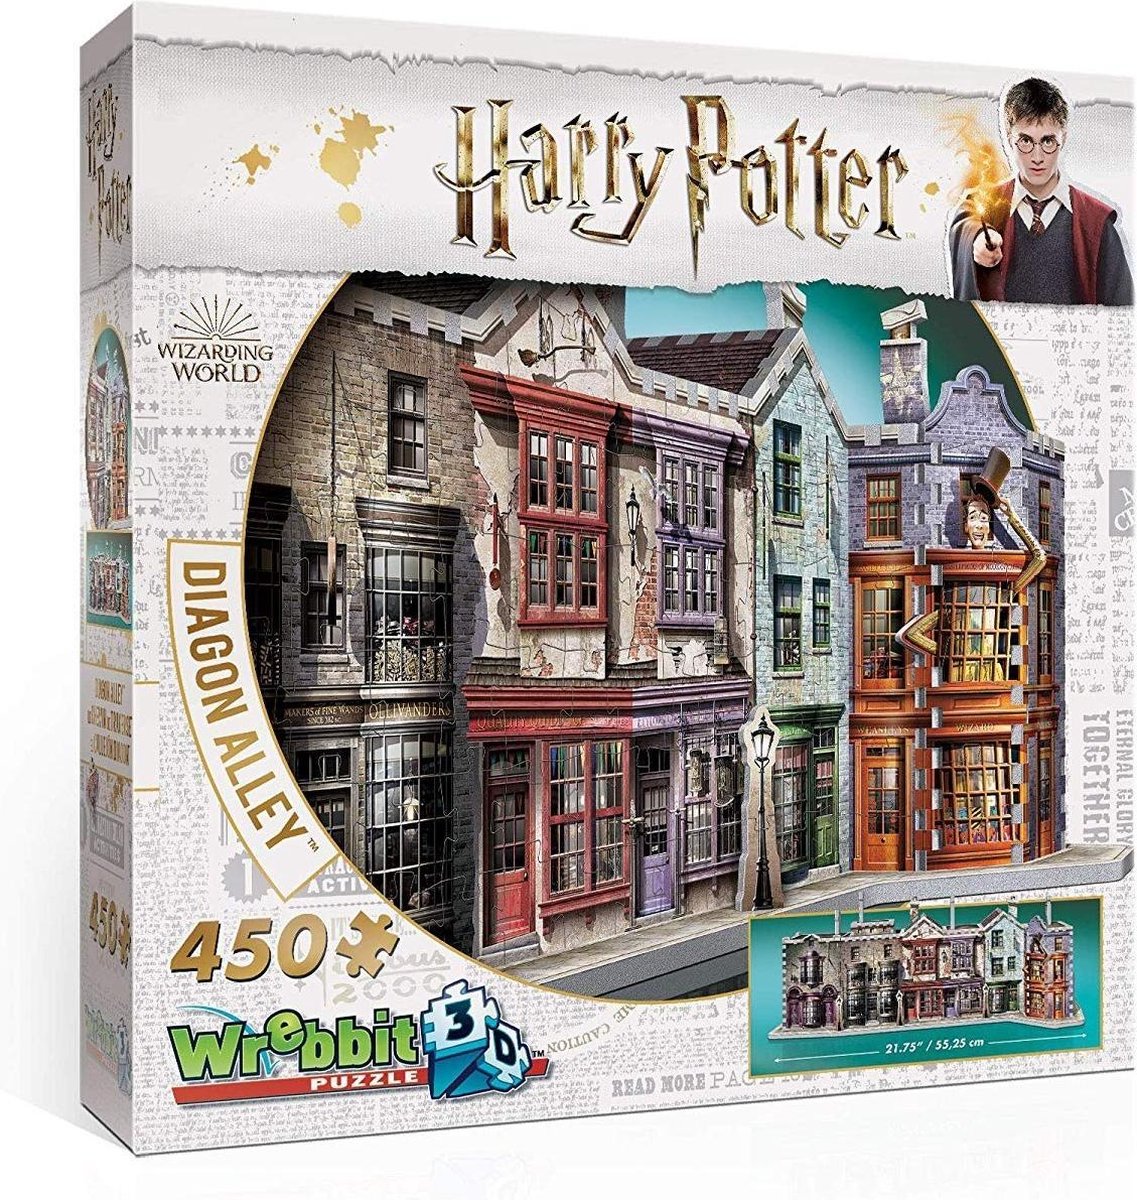 Dragon Alley - Wrebbit 3D Puzzel - Harry Potter - 450 Stukjes - wrebbit